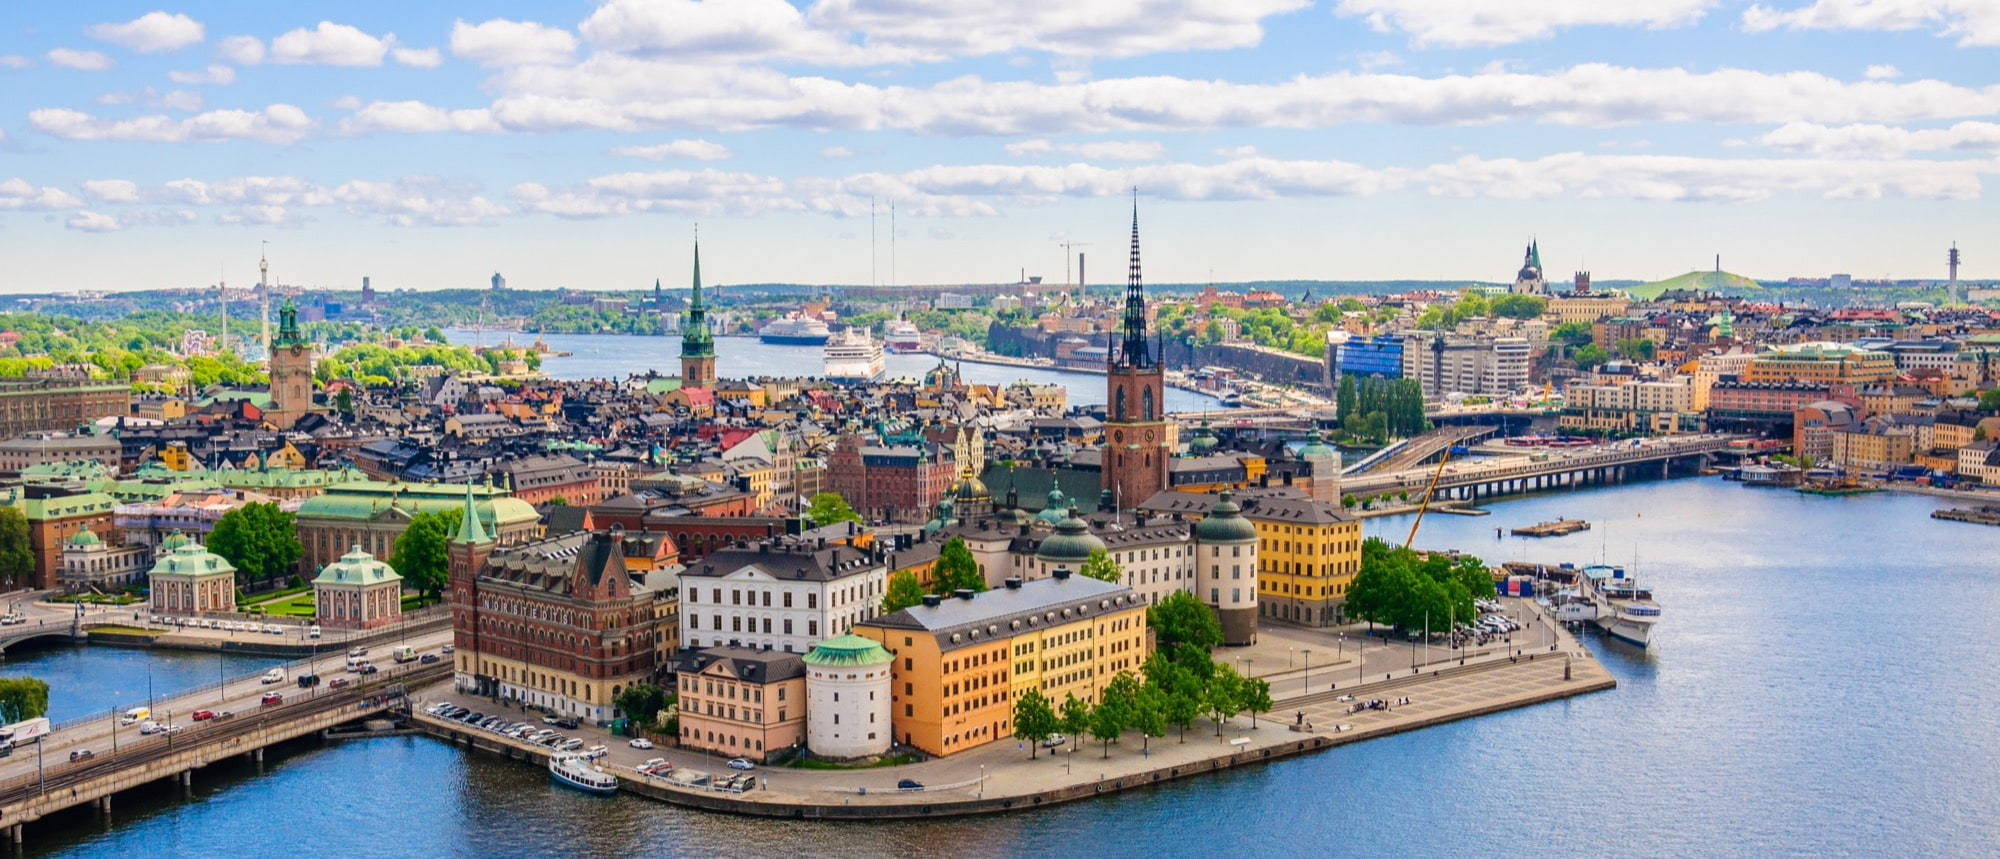 UK & Europe Jobs | Rishworth Aviation | Stockholm city landscape and river